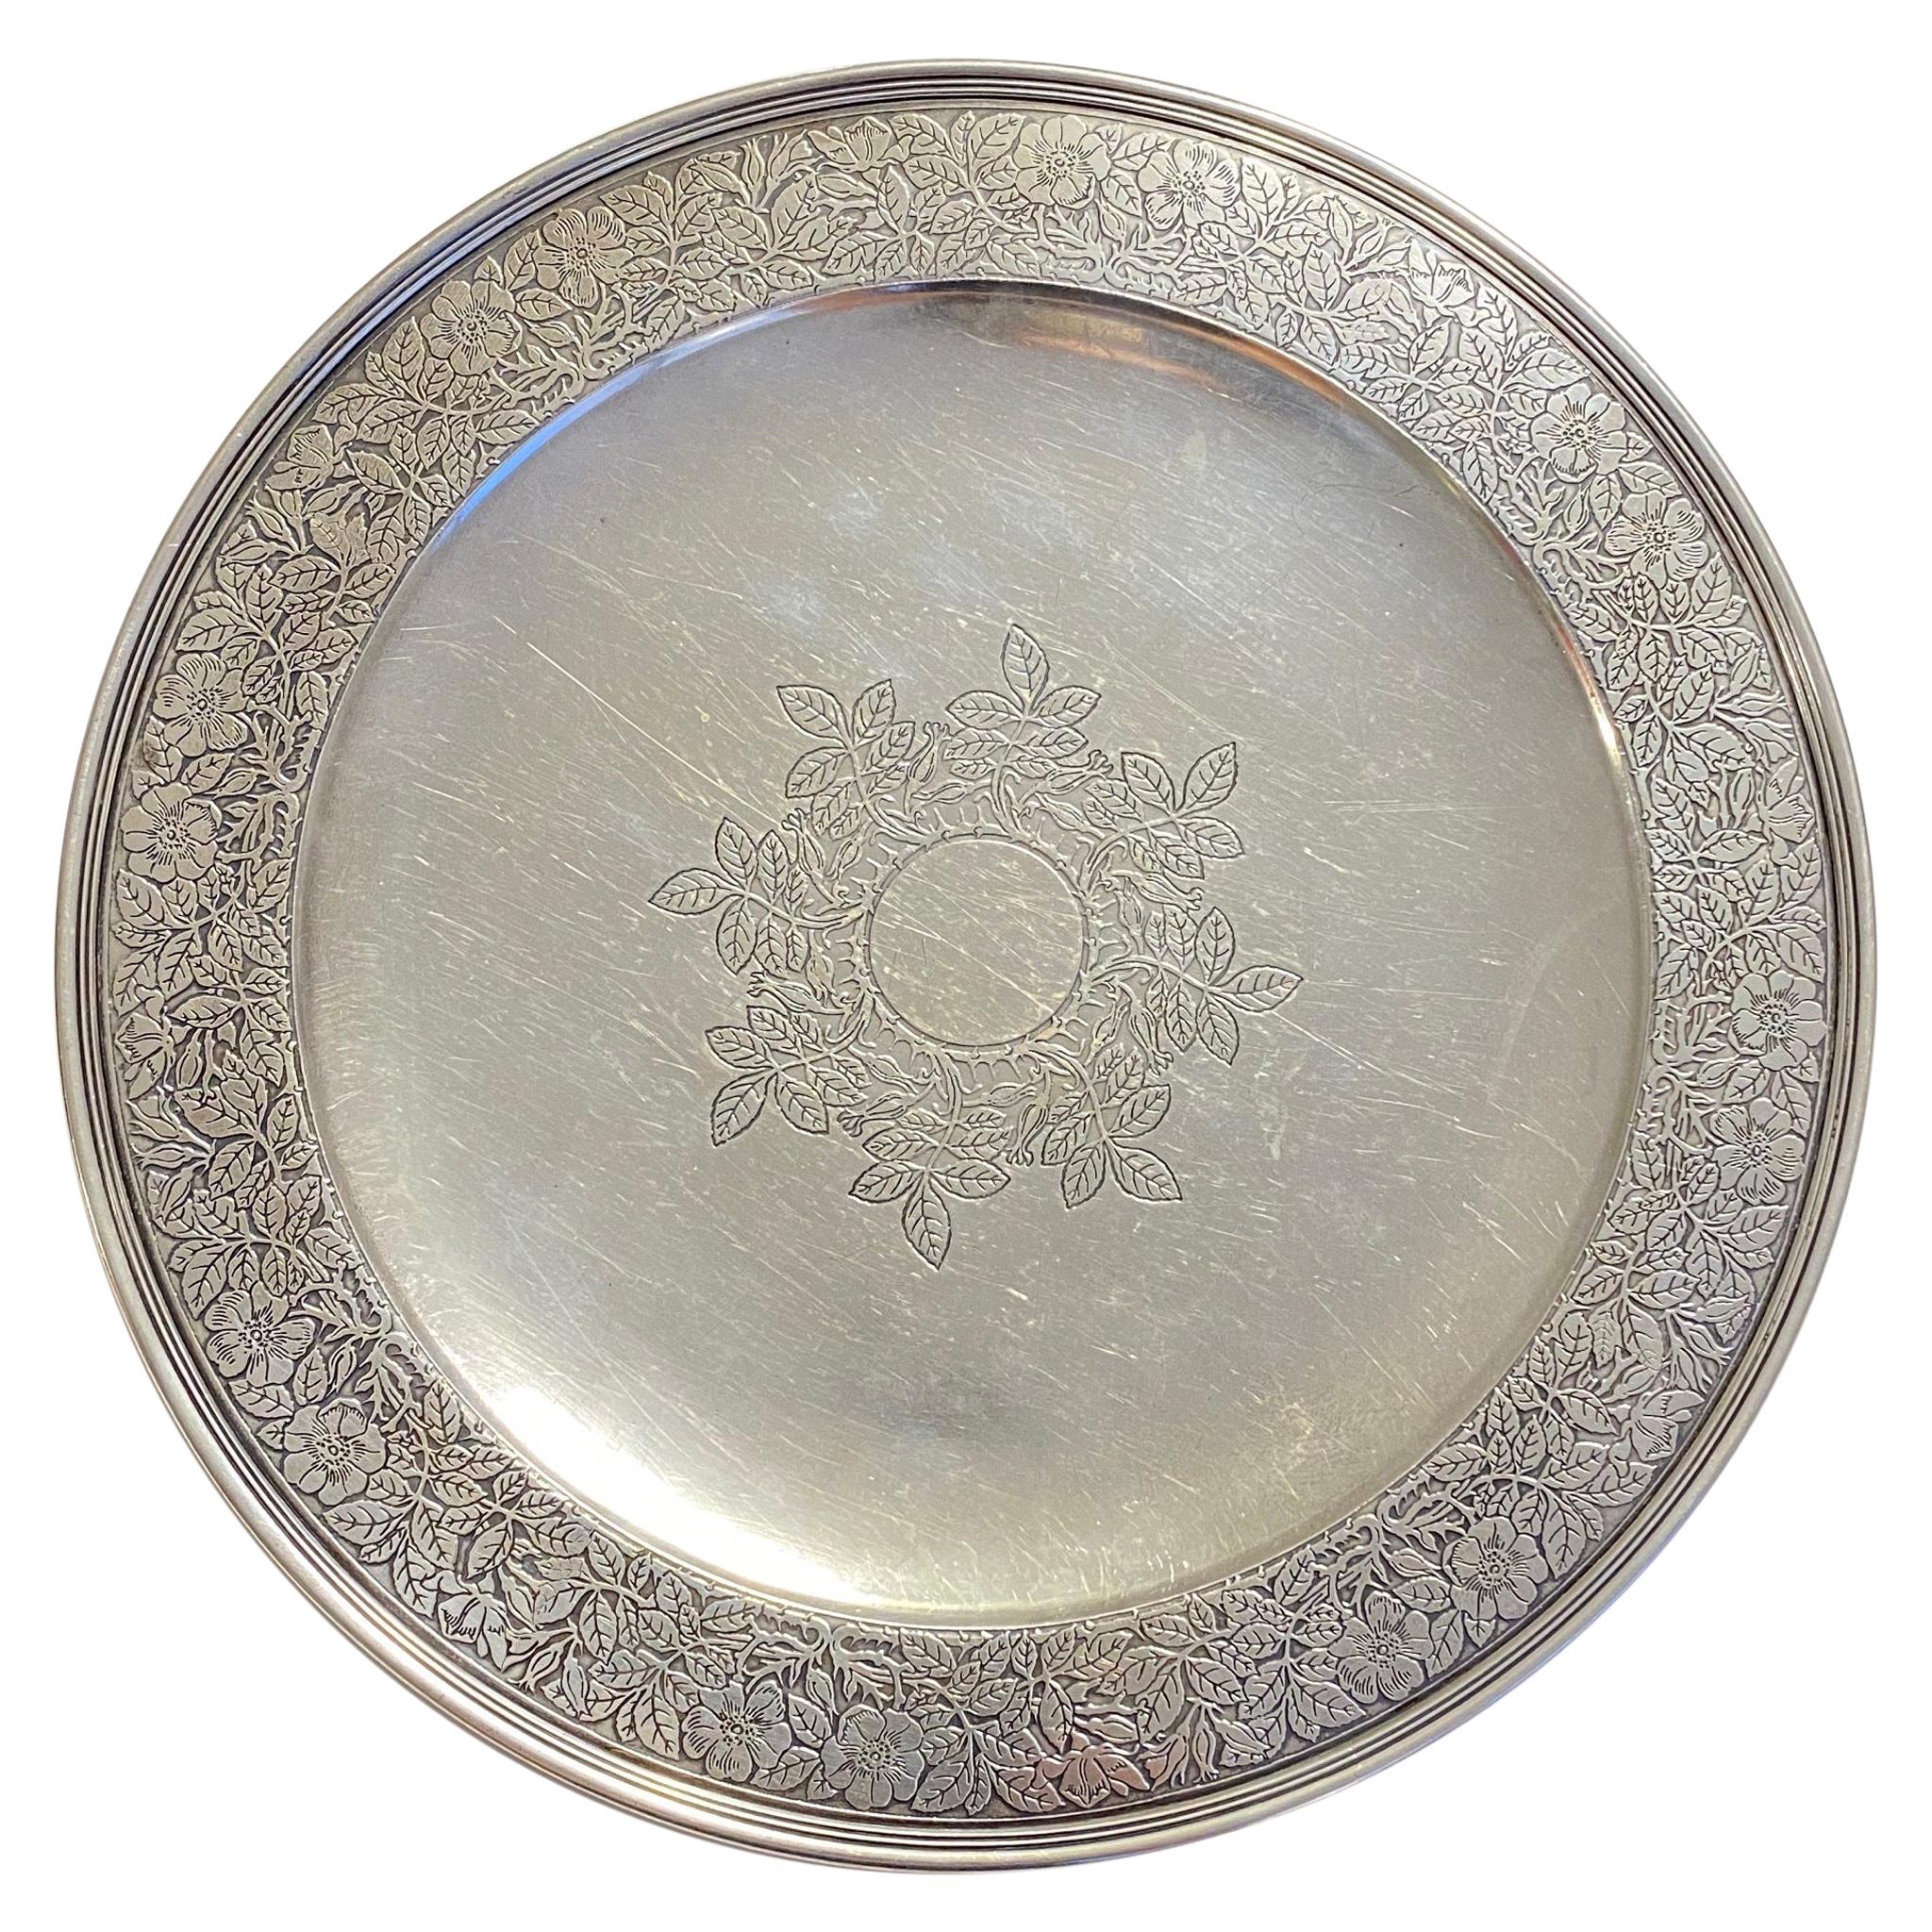 Tiffany & Co. Sterling Silver Serving Platter circa 1900s Estate Find For Sale